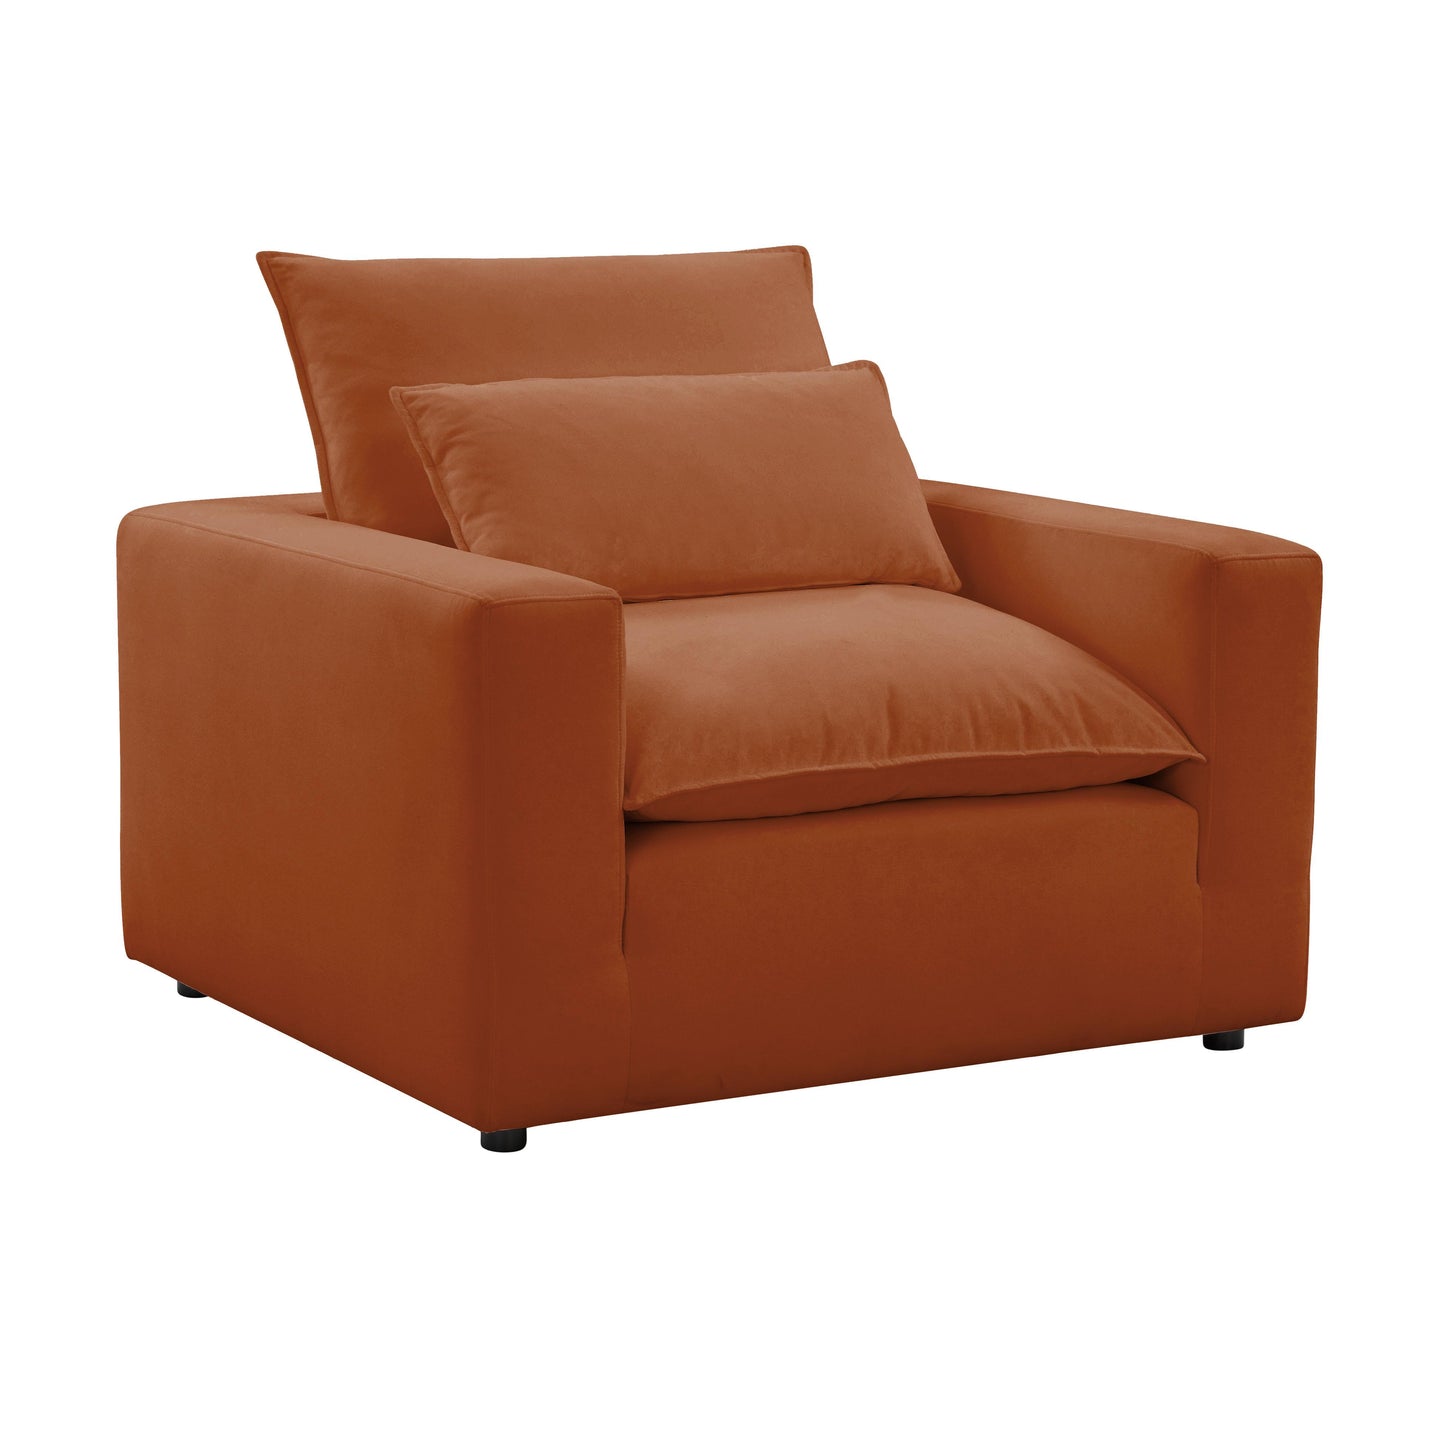 Tov Furniture Cali Rust Arm Chair